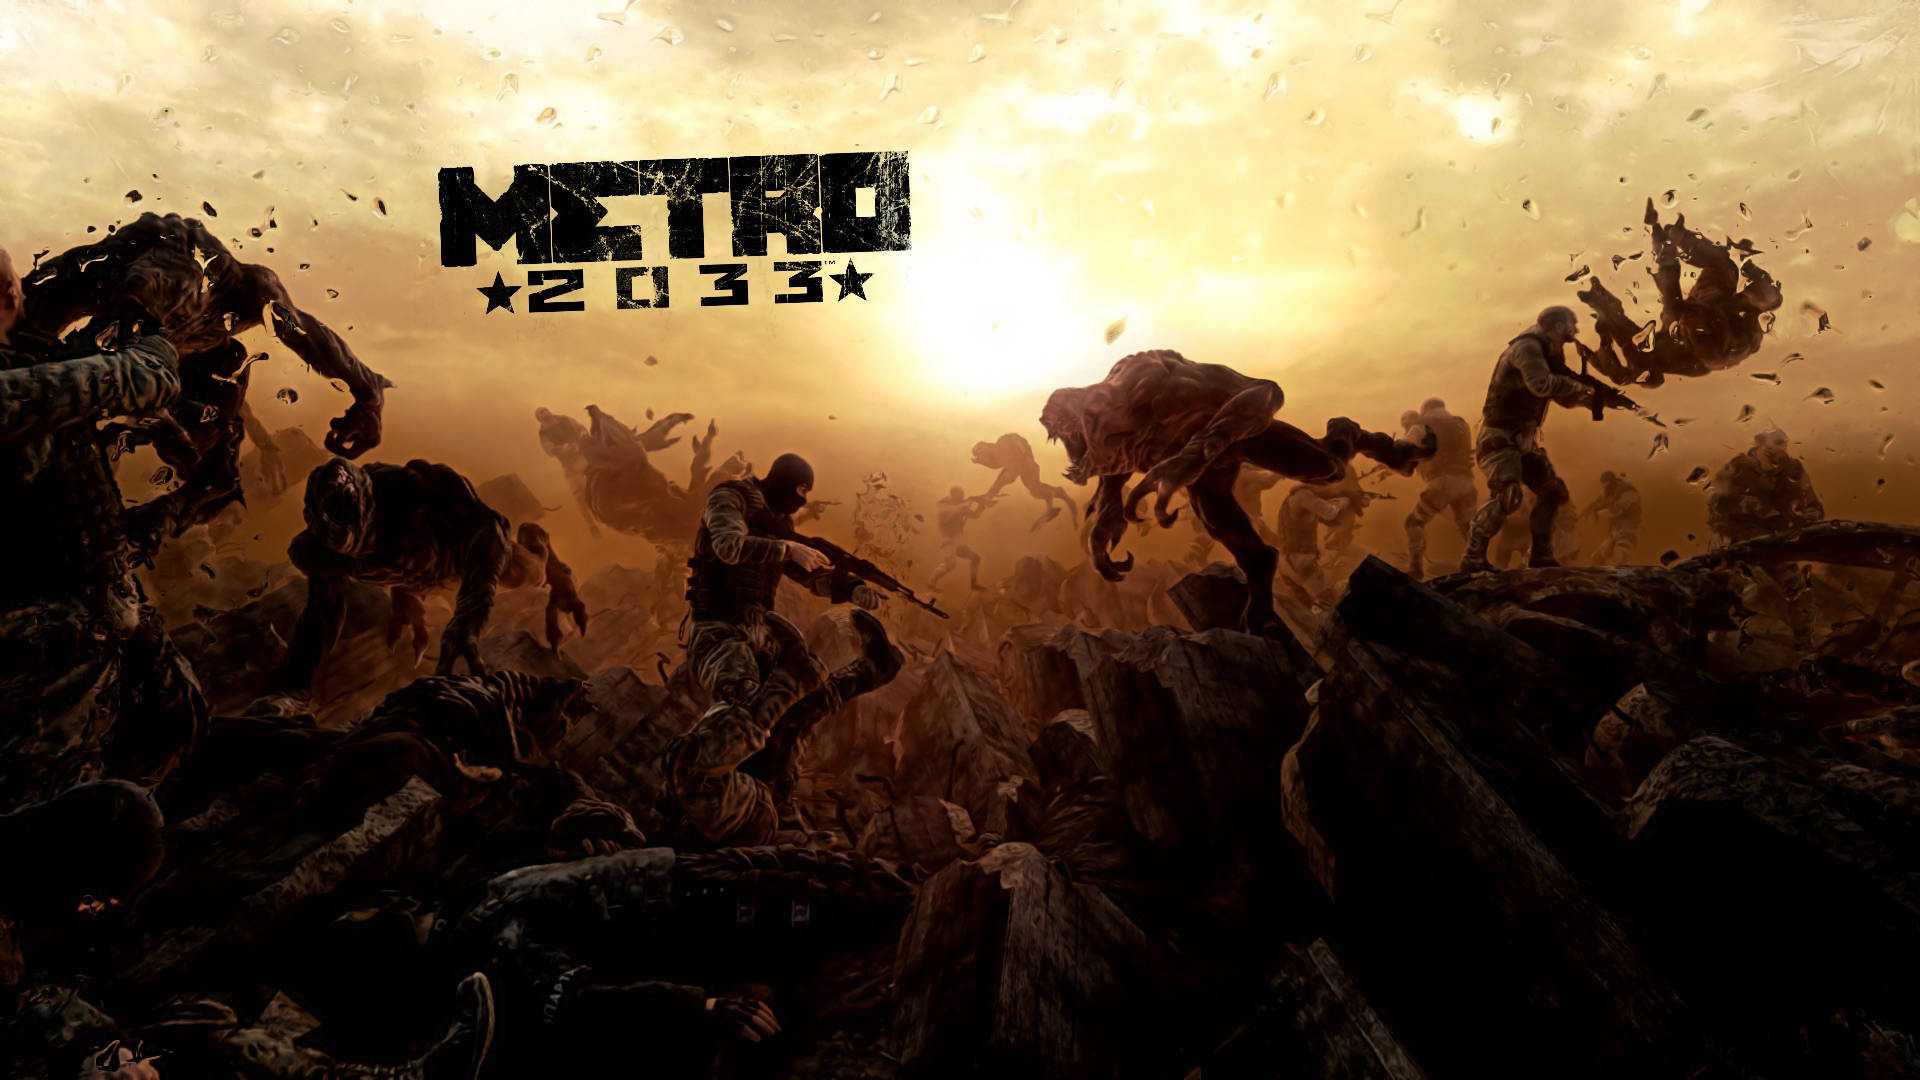 Metro 2033 Battle Poster